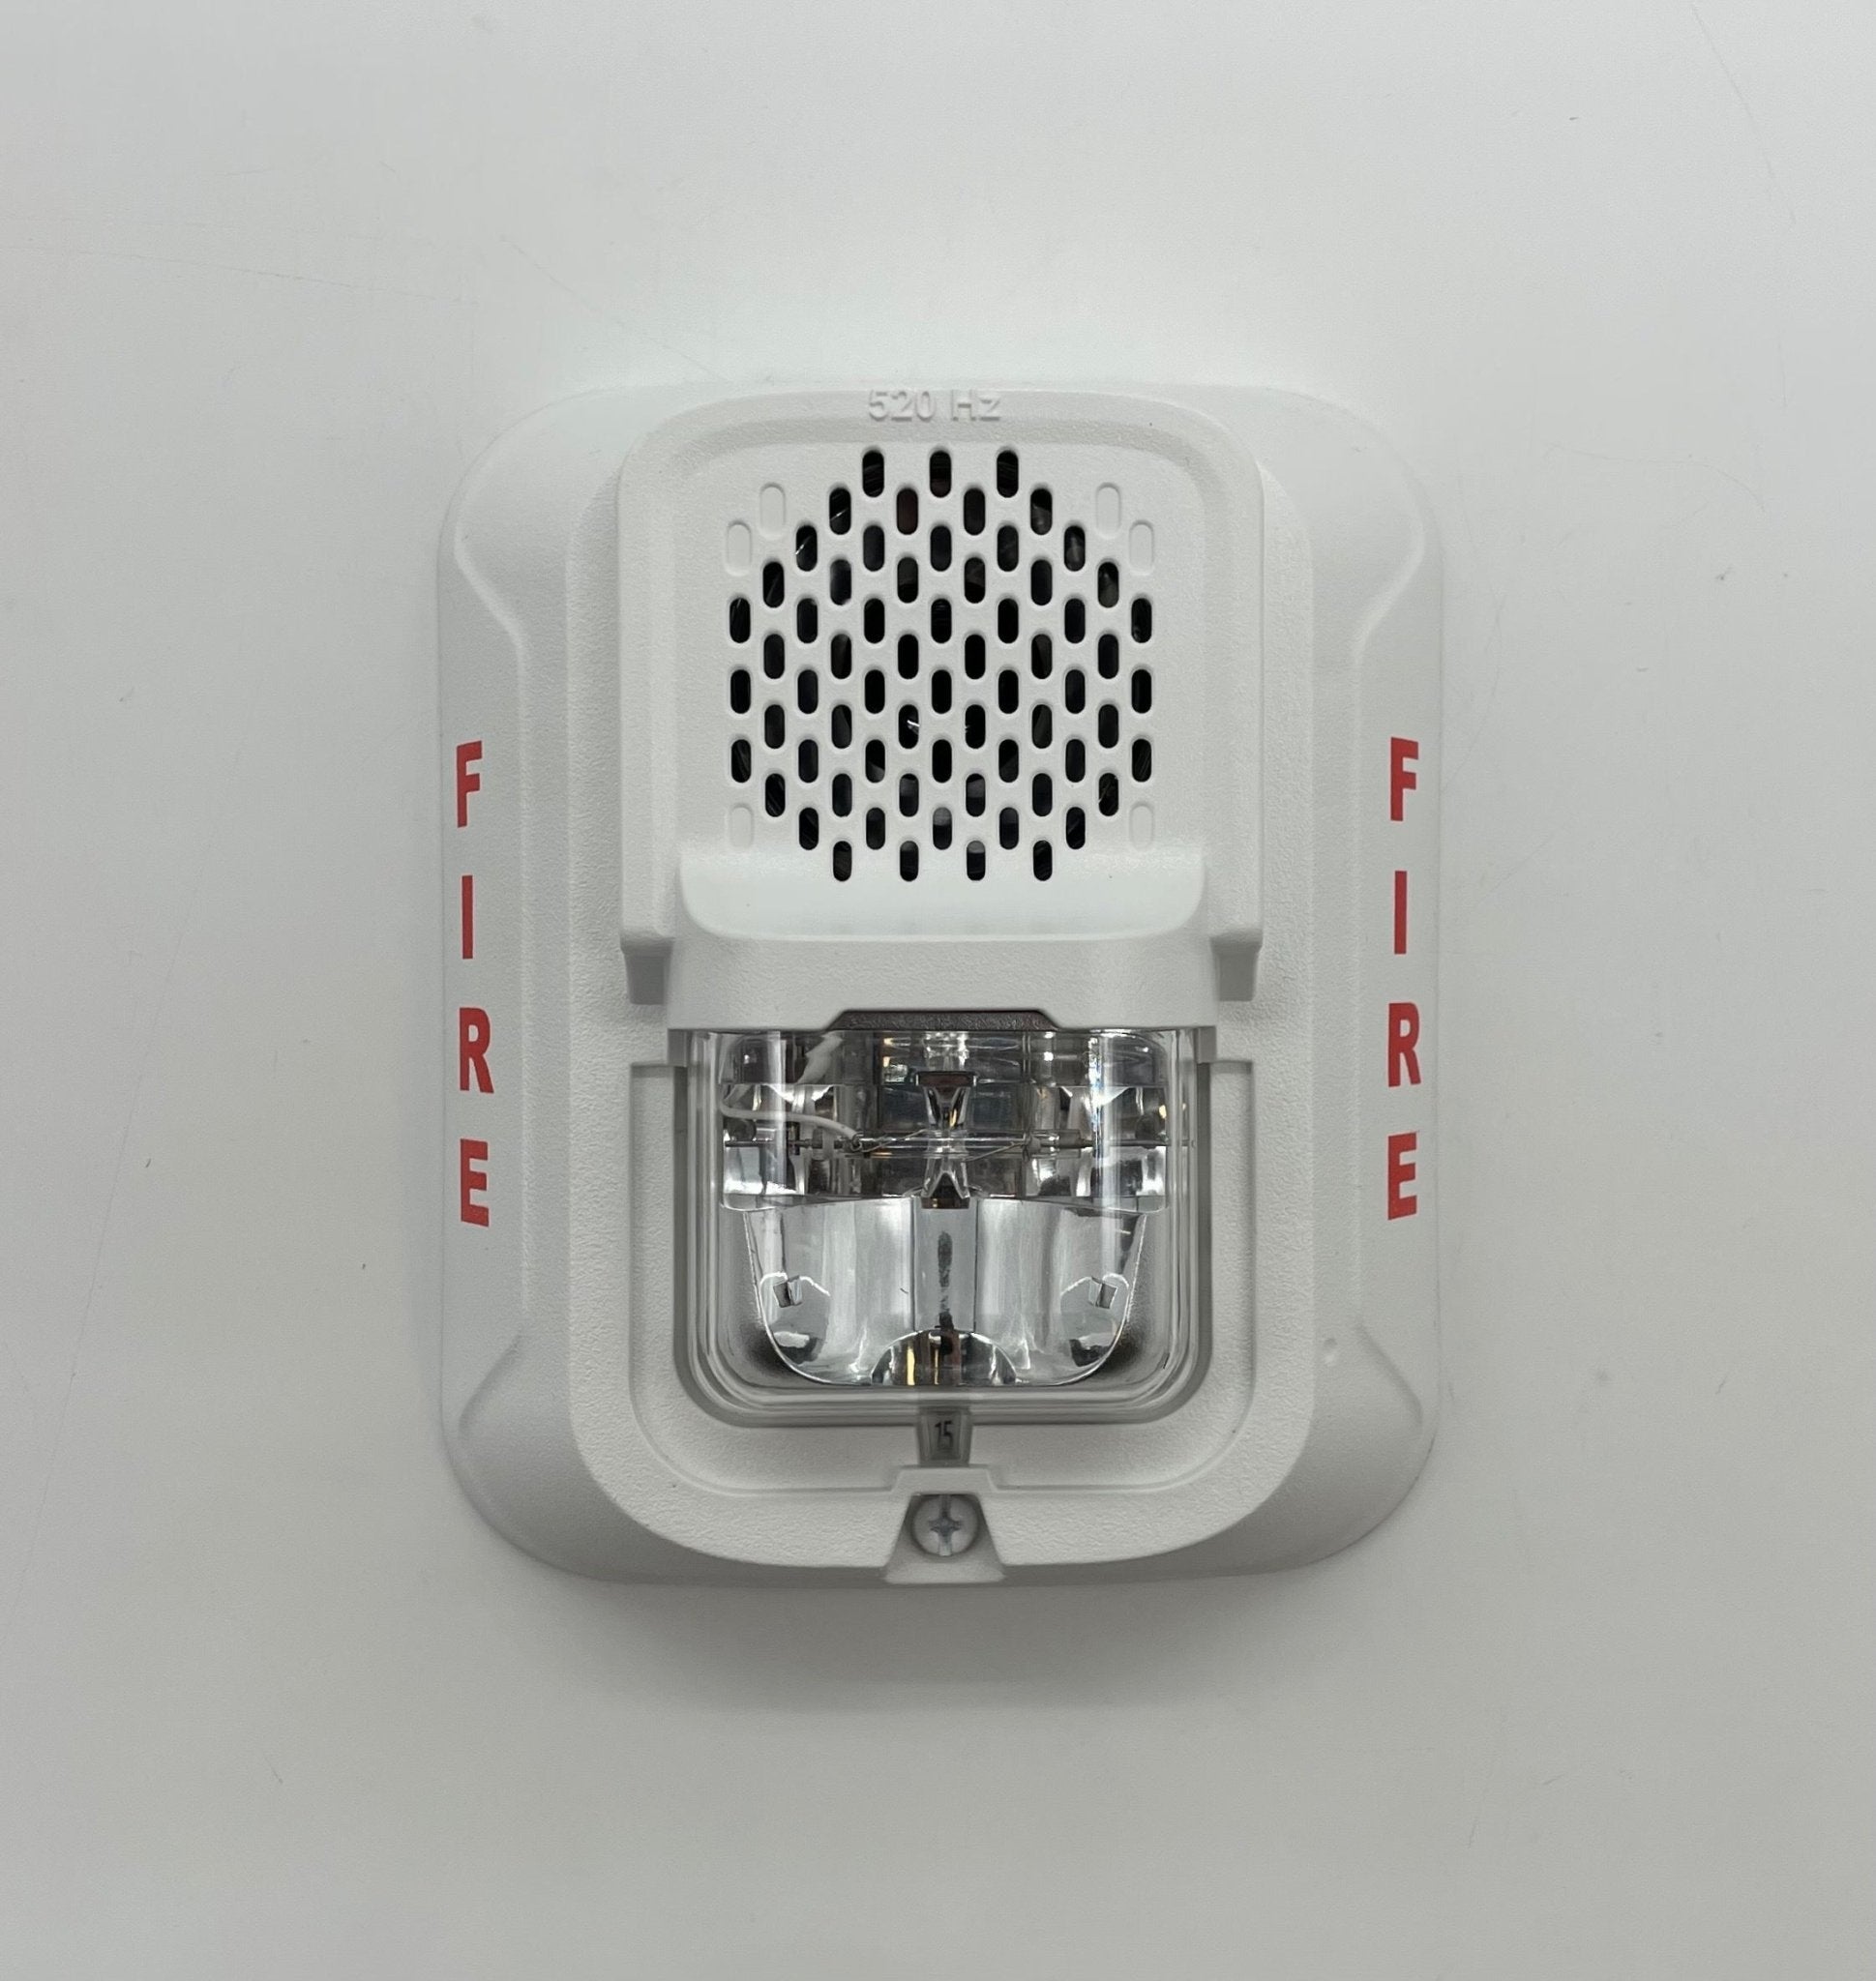 System Sensor P2WL-LF - The Fire Alarm Supplier